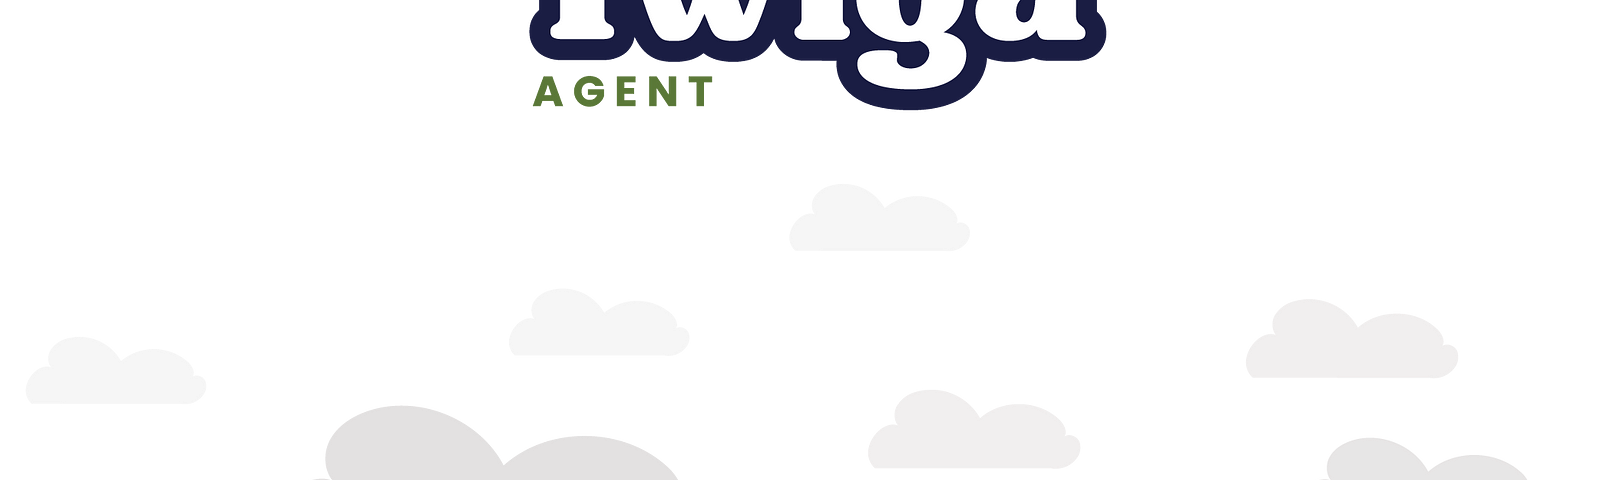 Twiga Agent Logo And Illustration